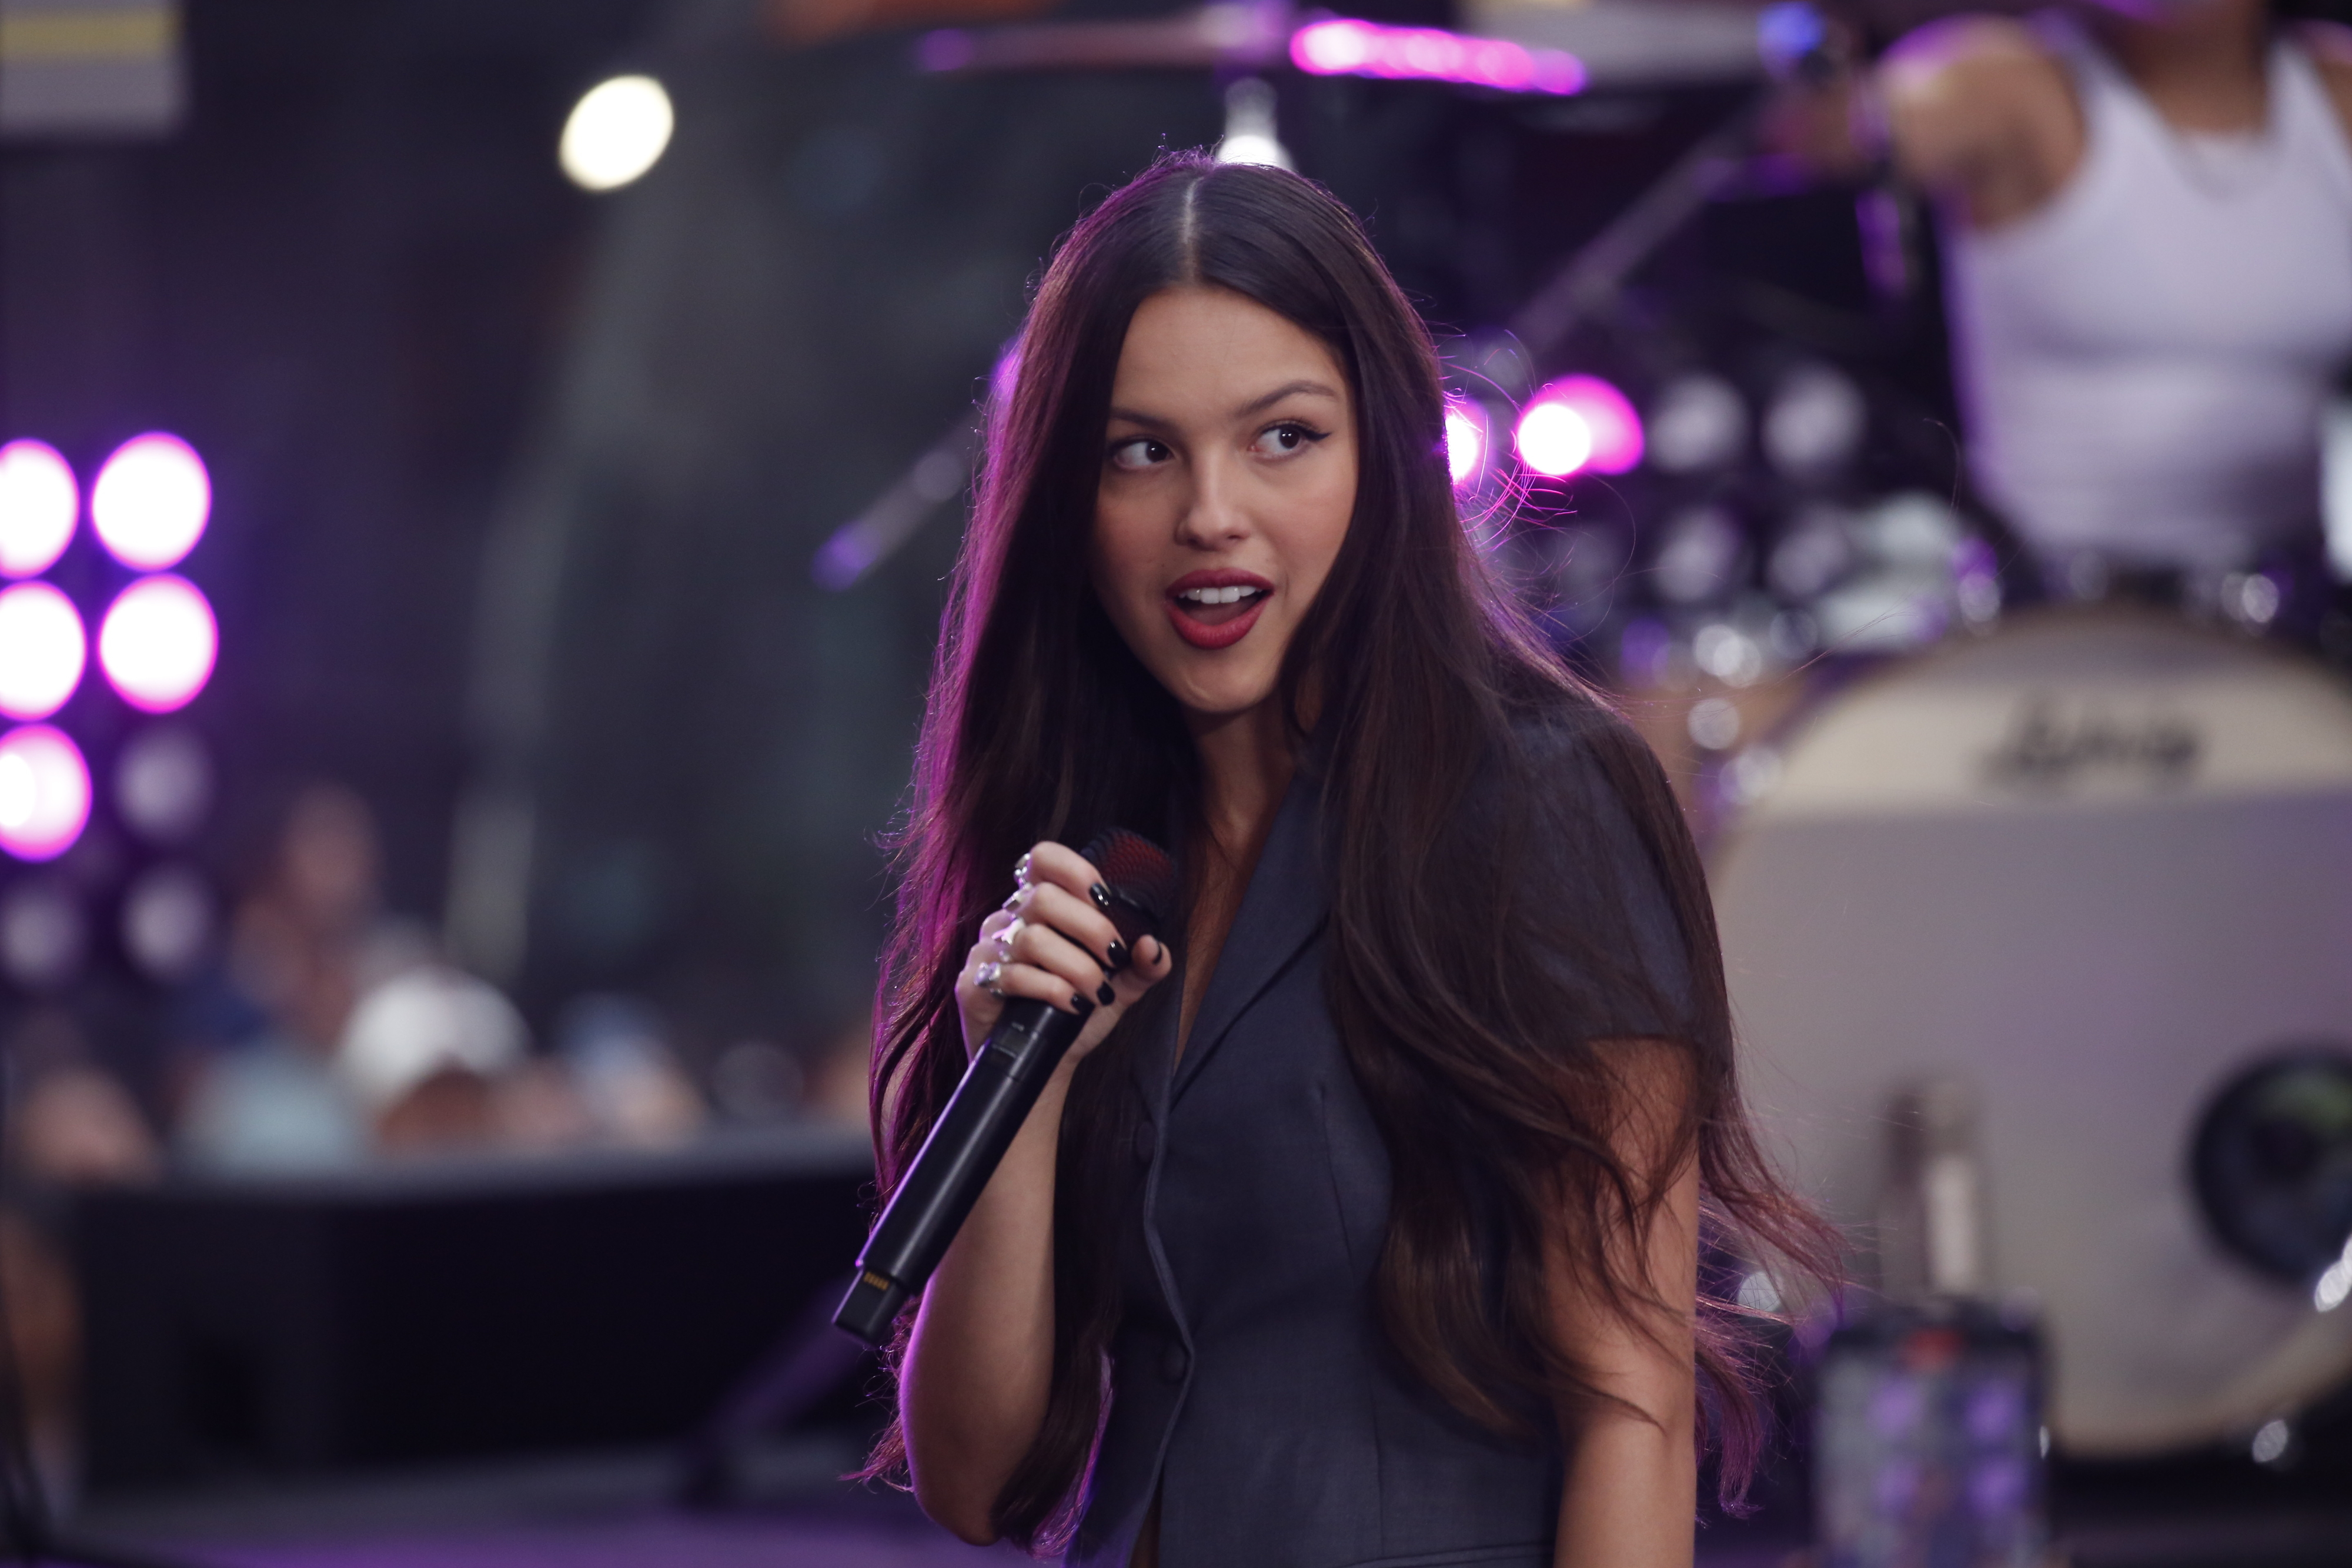 A close-up of Olivia singing